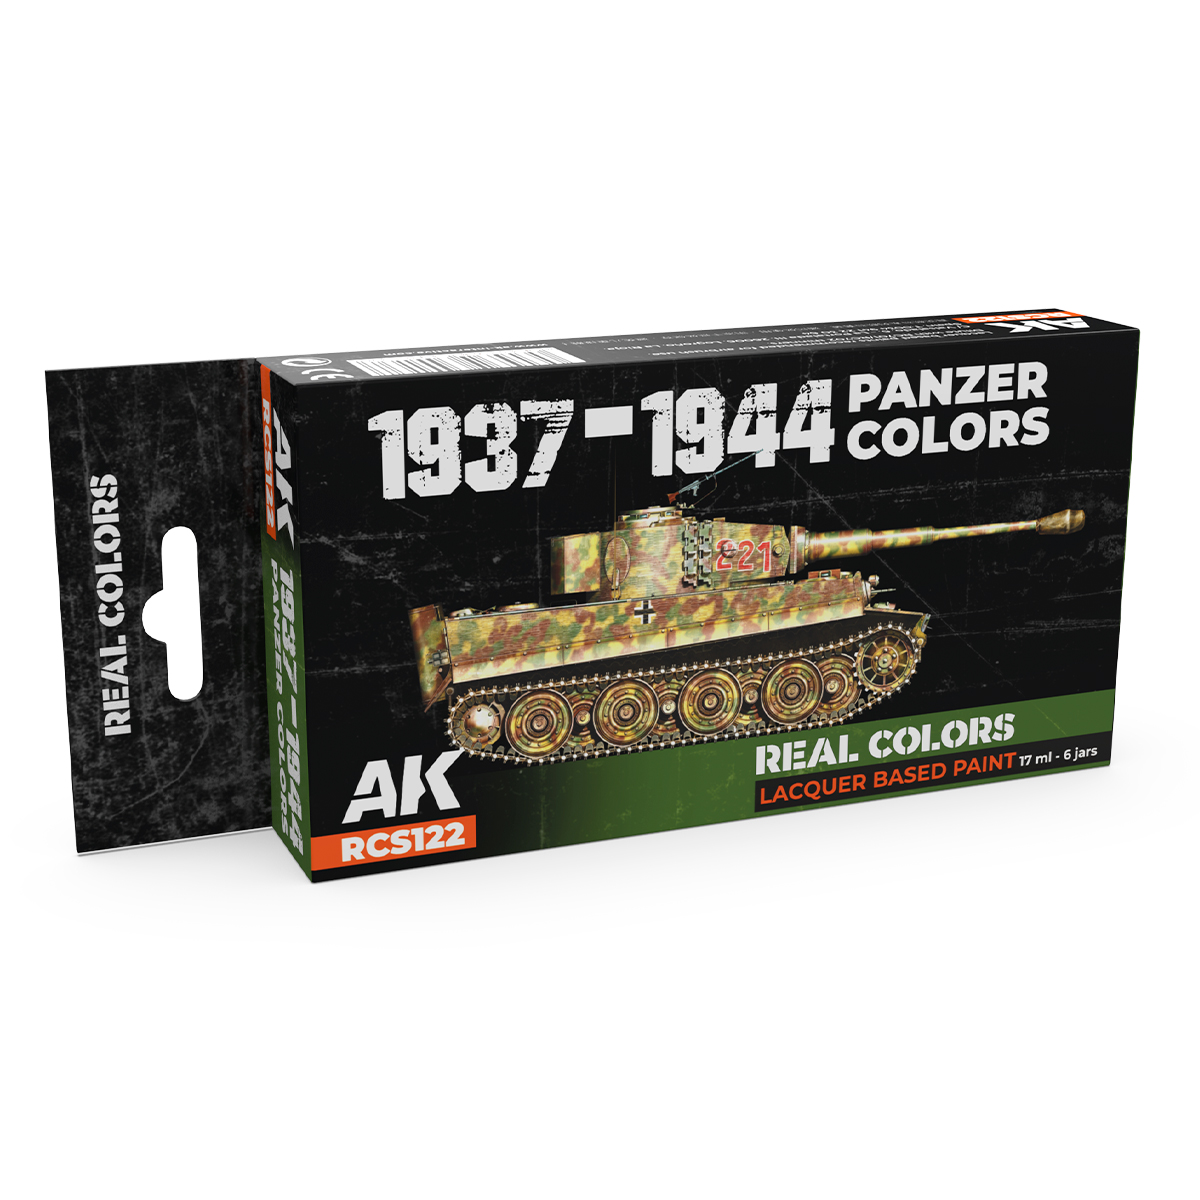 1937-1944 Panzer Colors